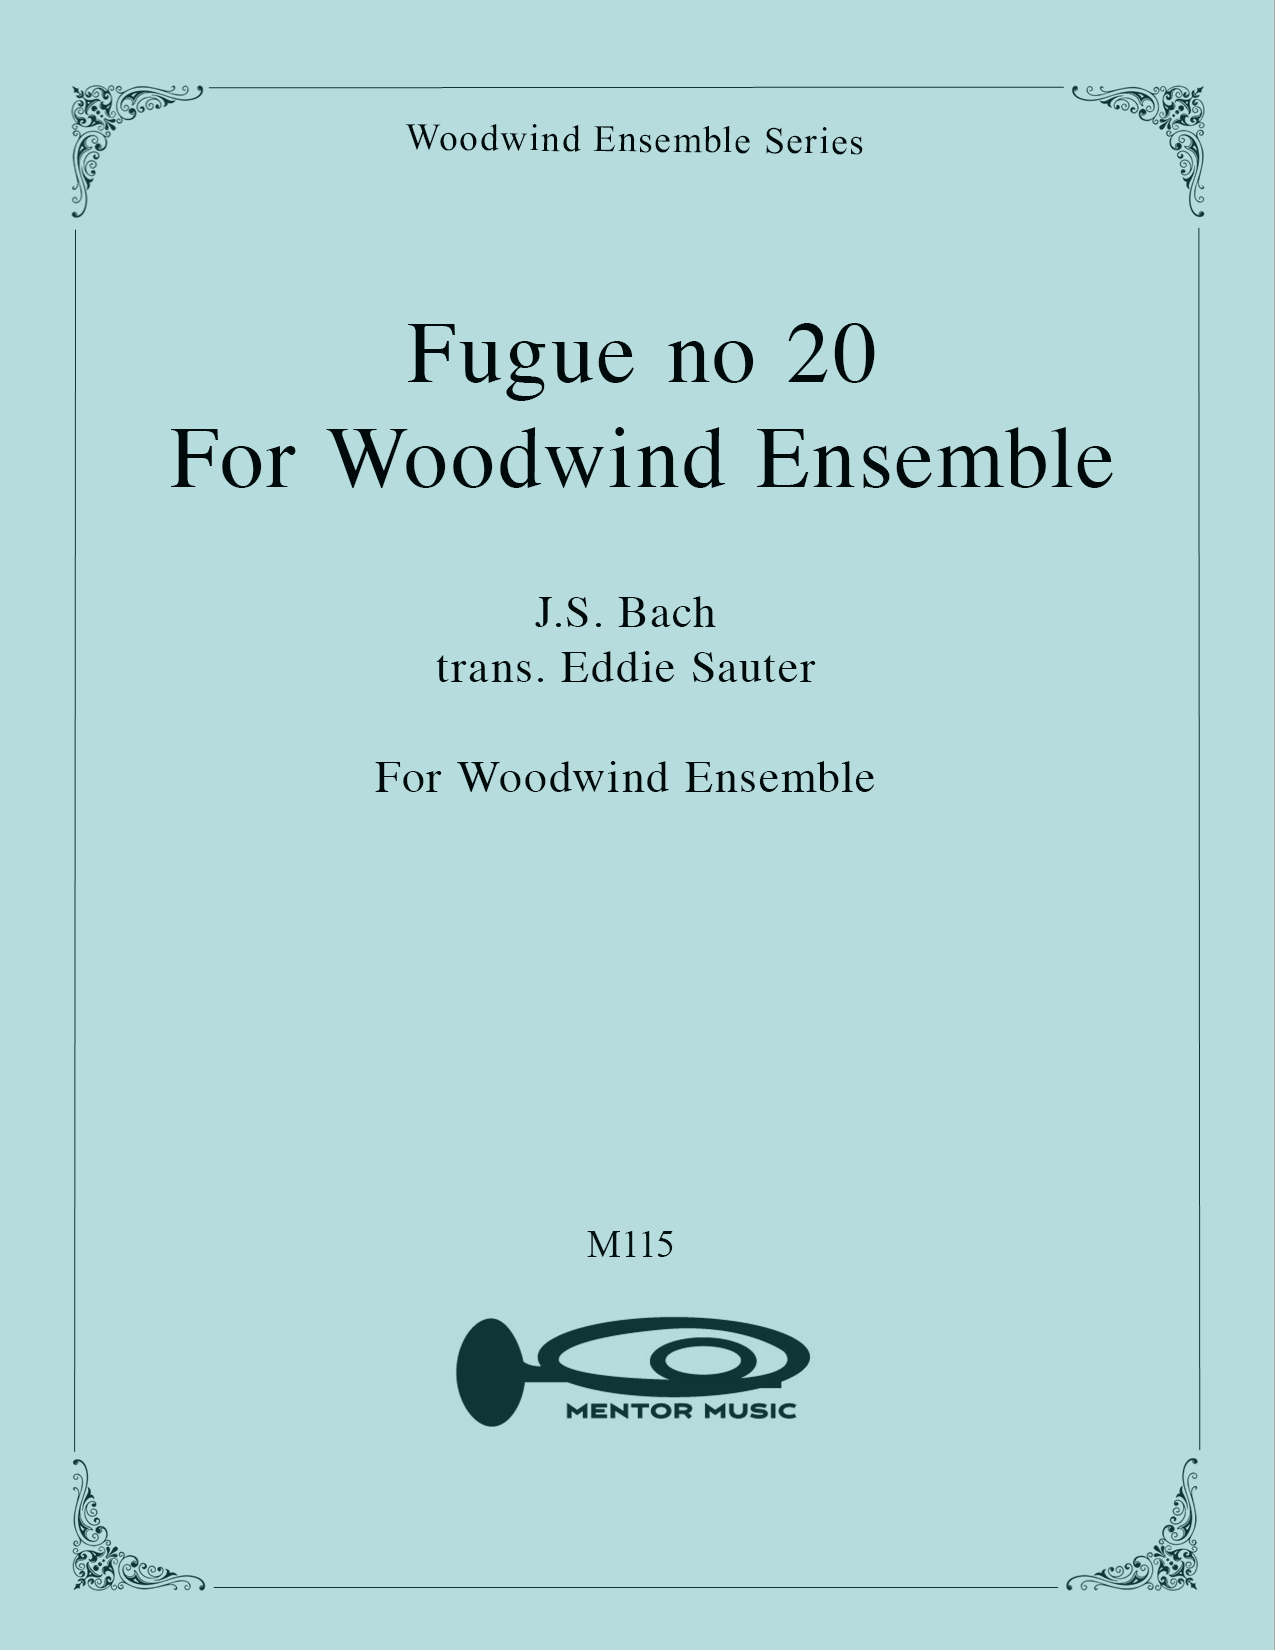 Fugue No. 20 for Woodwind Ensemble